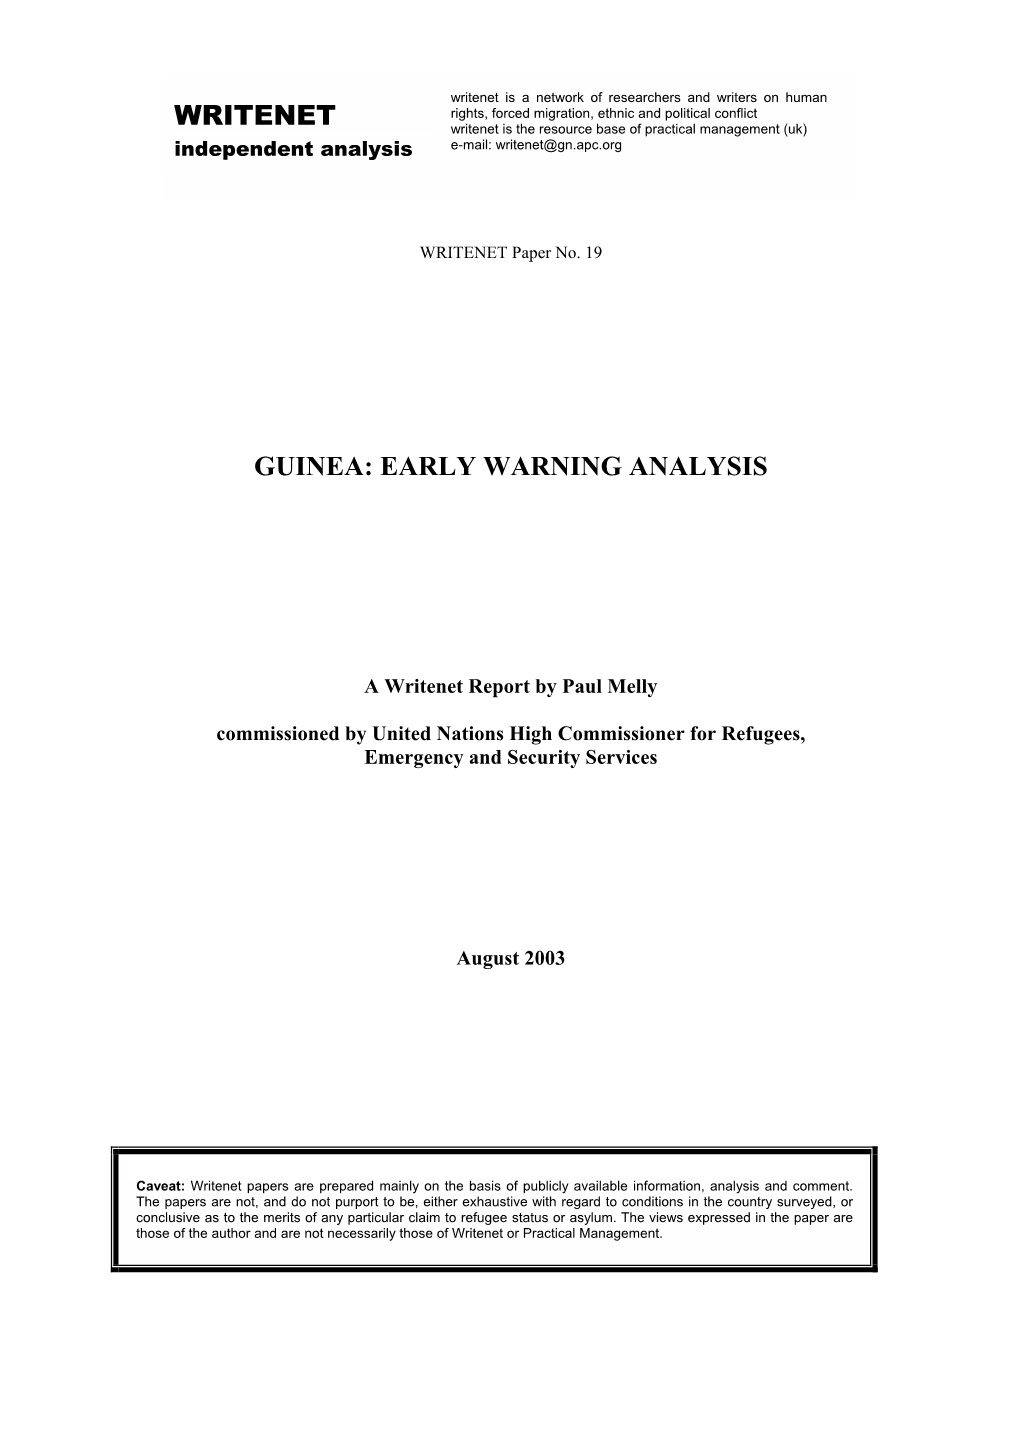 Guinea: Early Warning Analysis